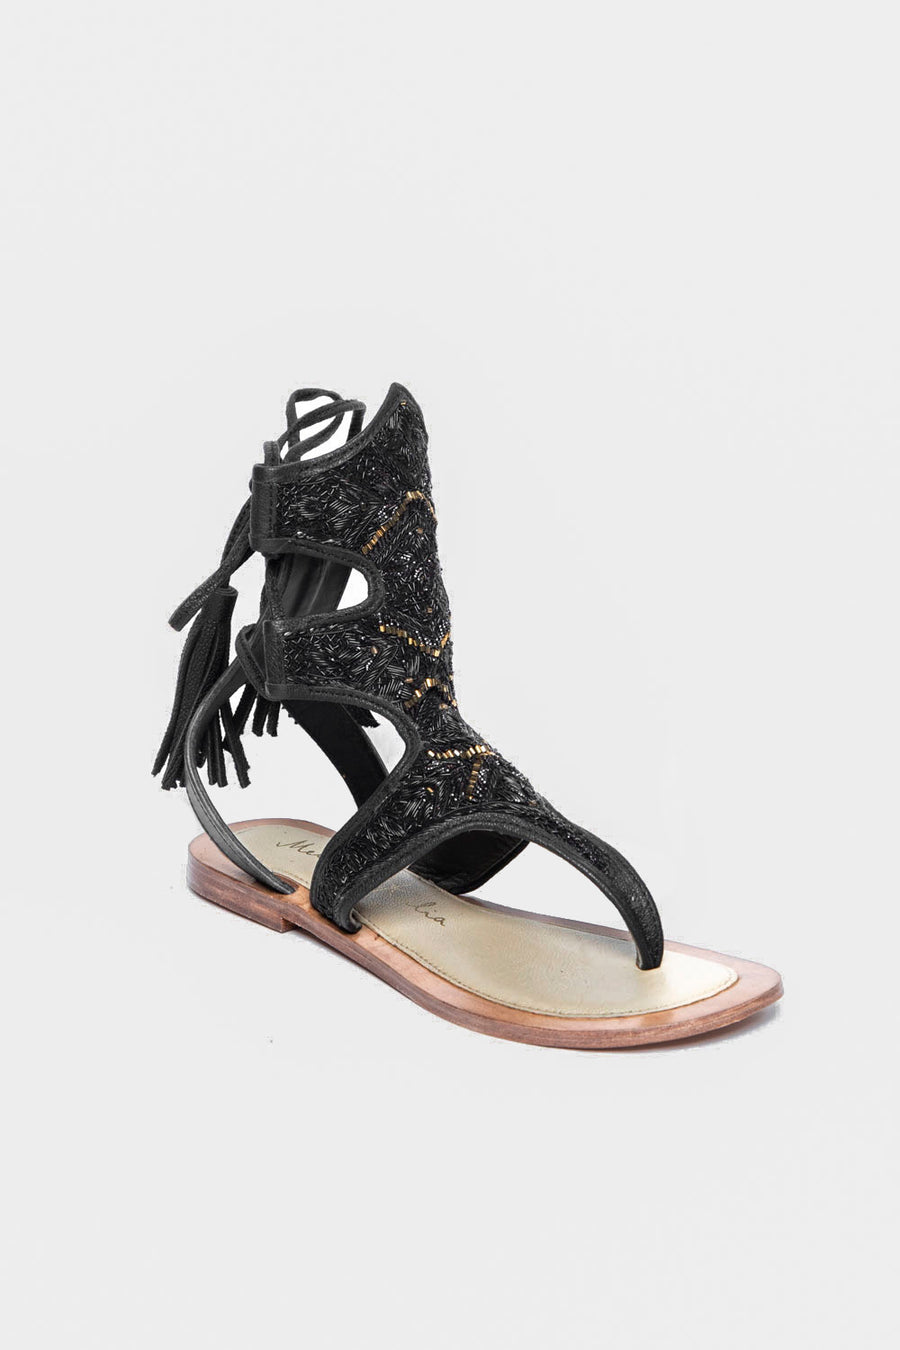 Sandalo infradito Meher Kakalia black gold clio sandal